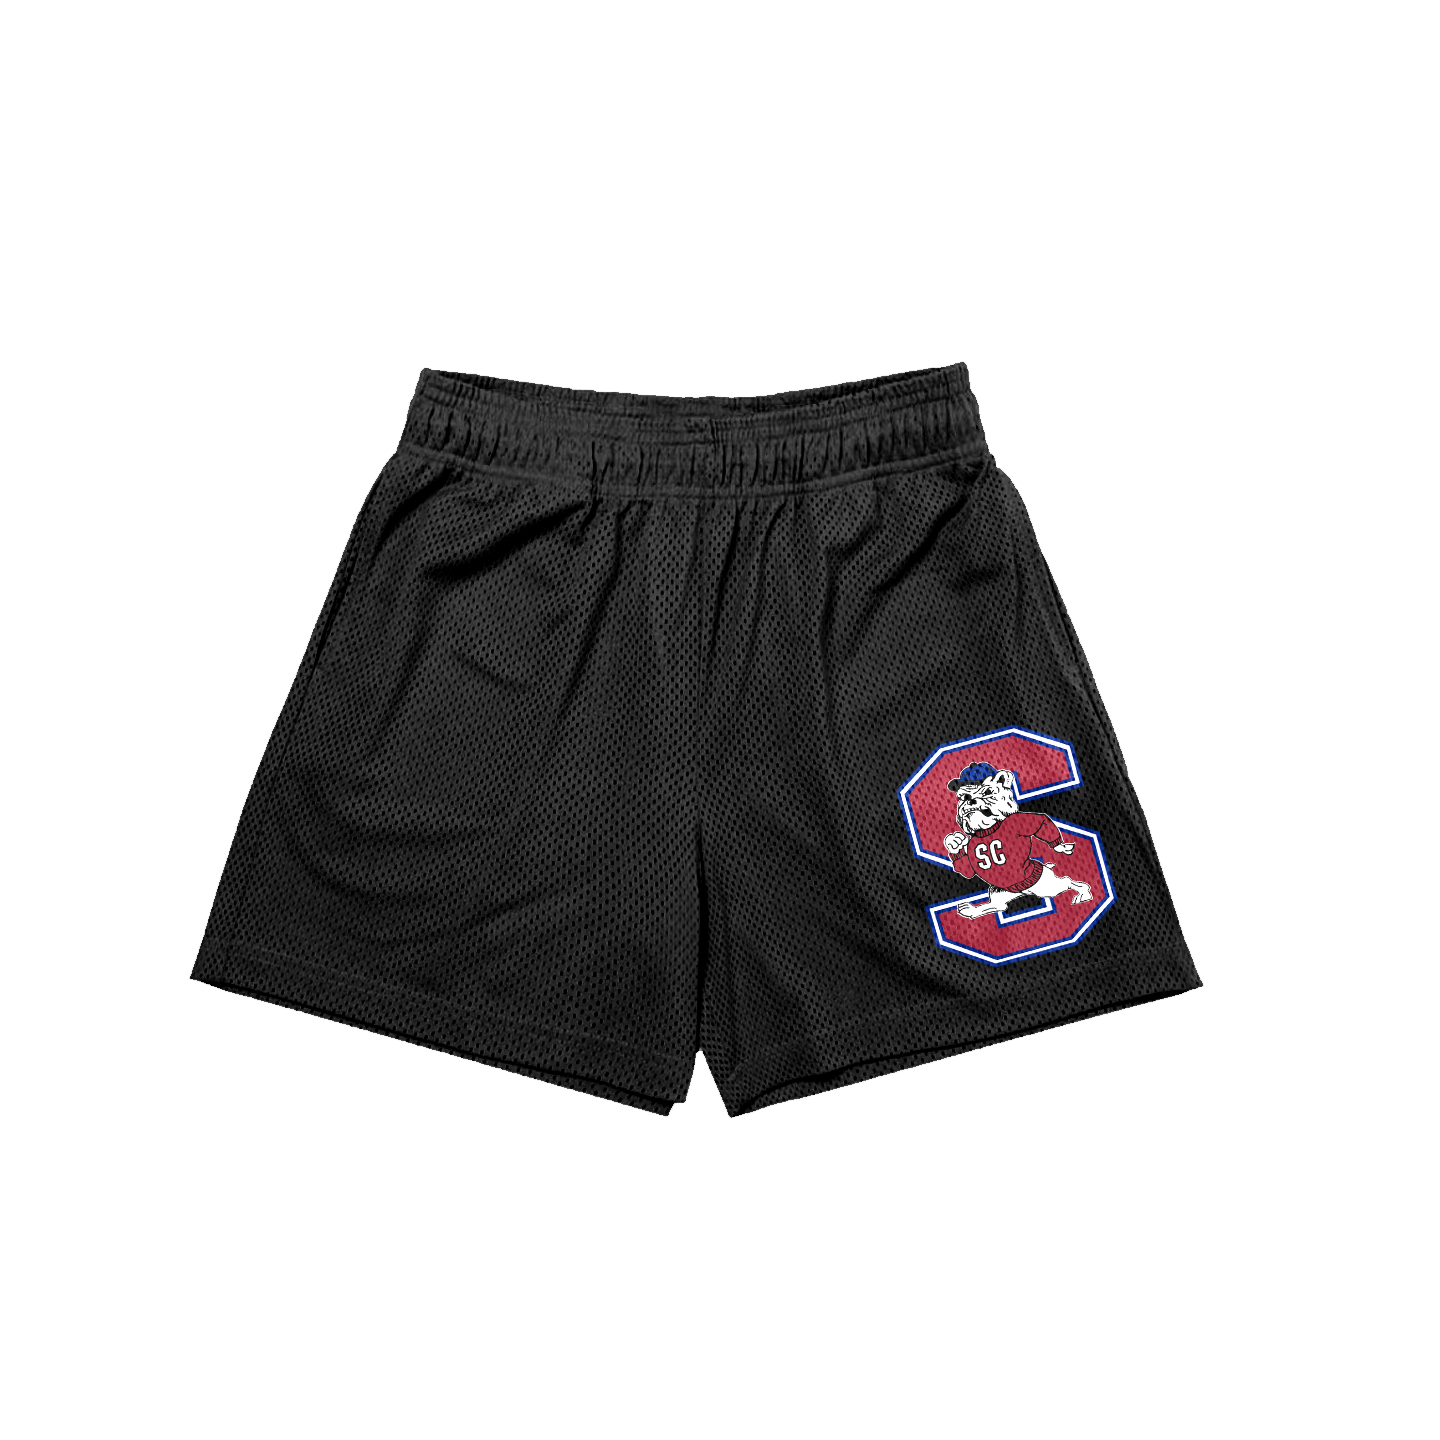 SCSU Mesh Shorts